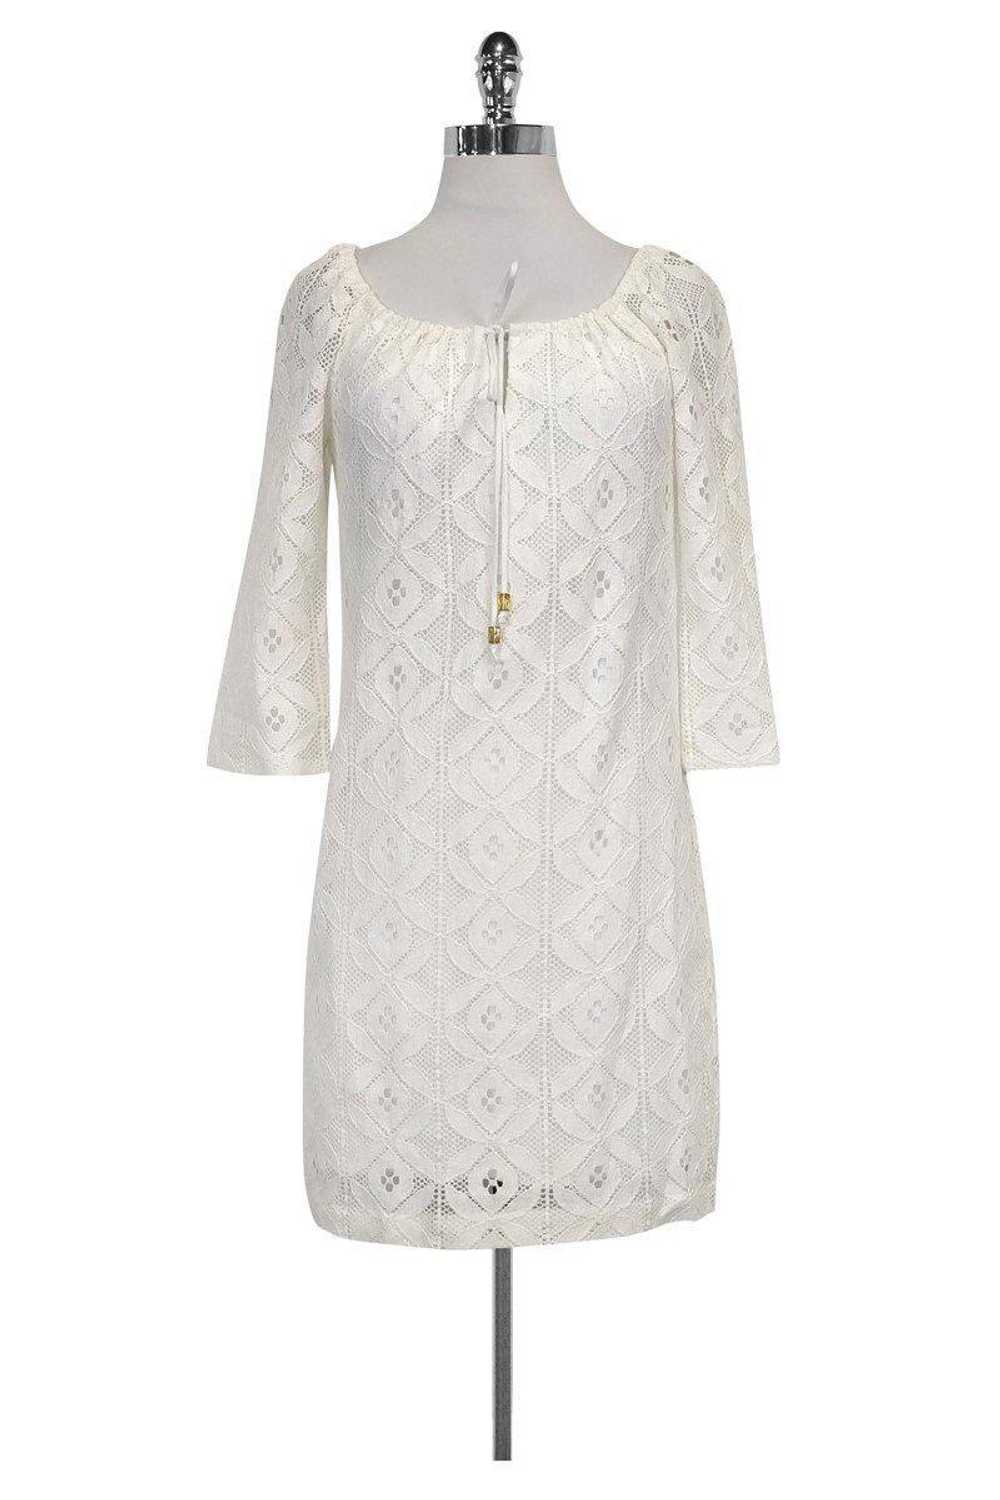 Trina Turk - White Lace Dress Sz 0 - image 1